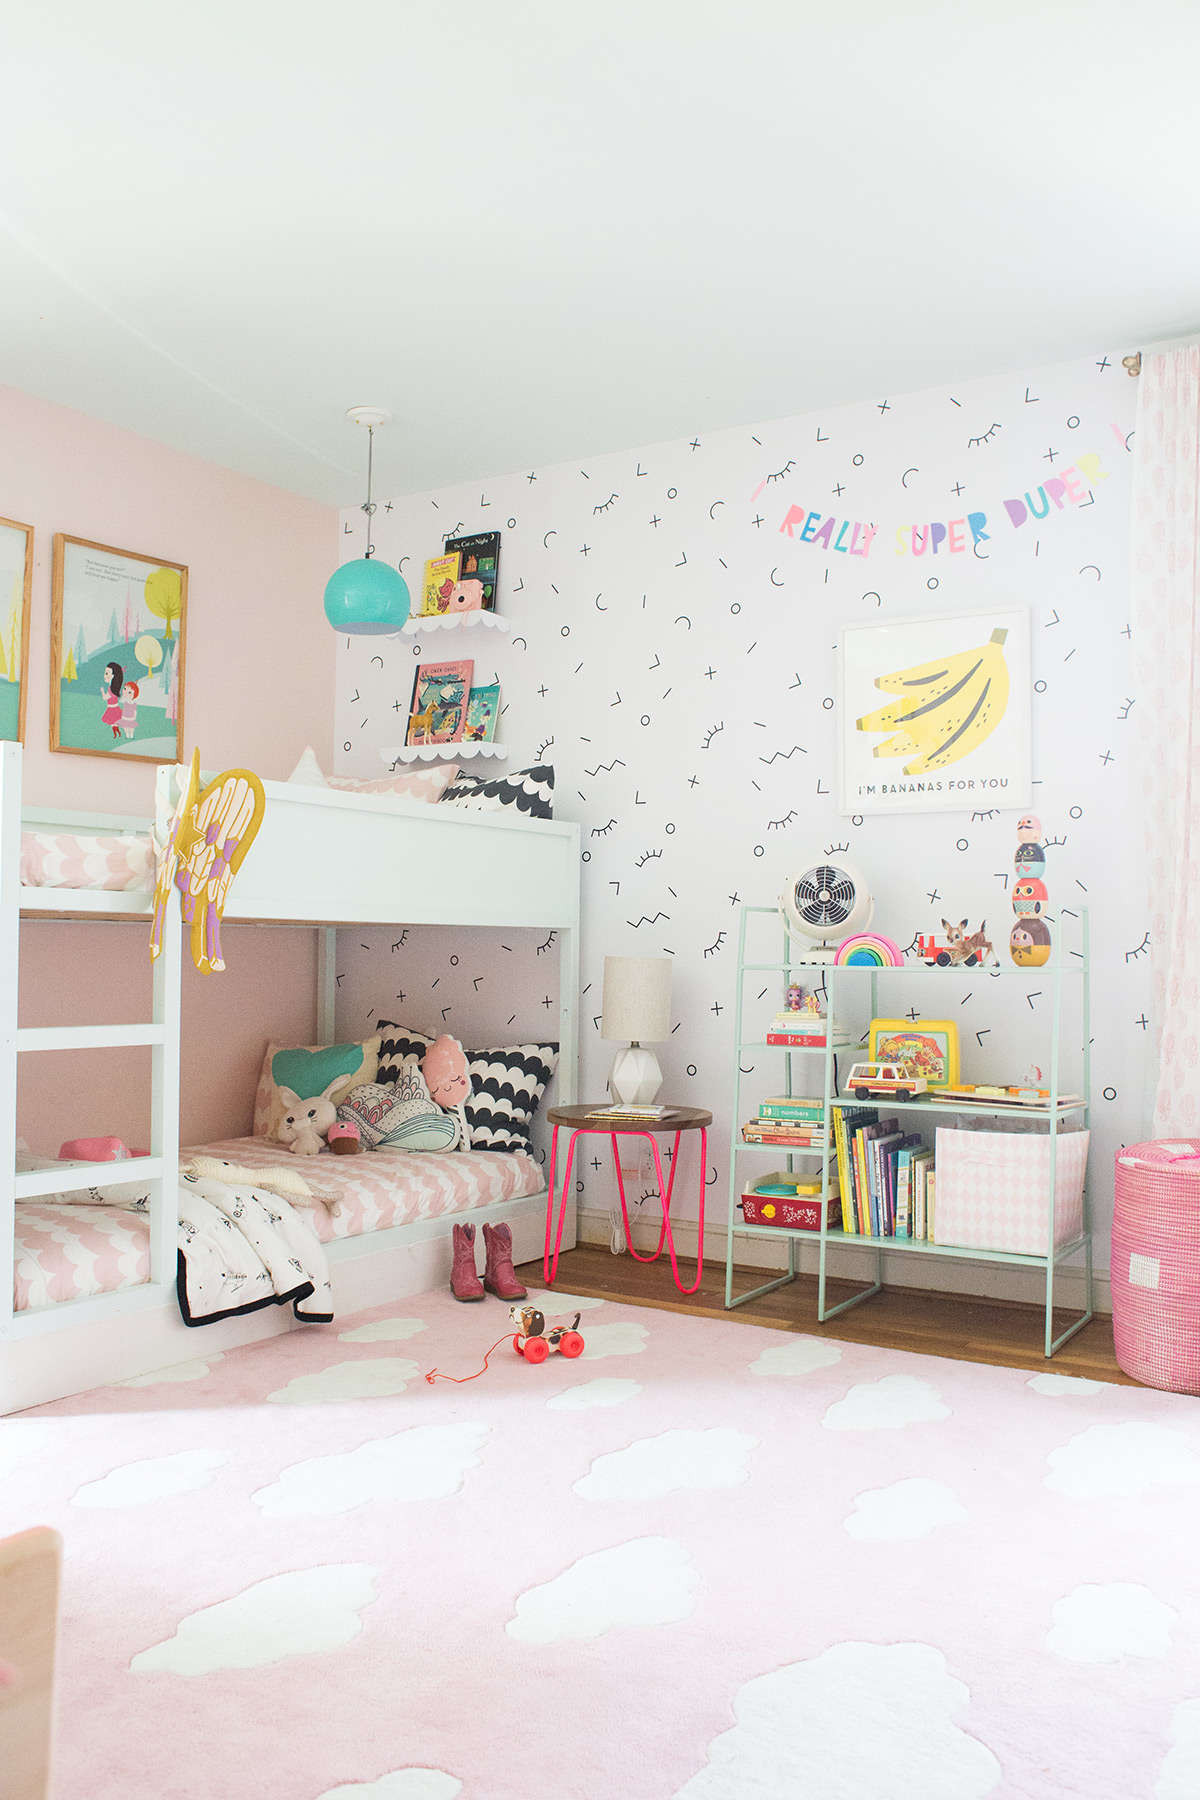 Bunk Bed Girl Bedroom Ideas
 a shared bedroom with bunk beds Lay Baby Lay Lay Baby Lay